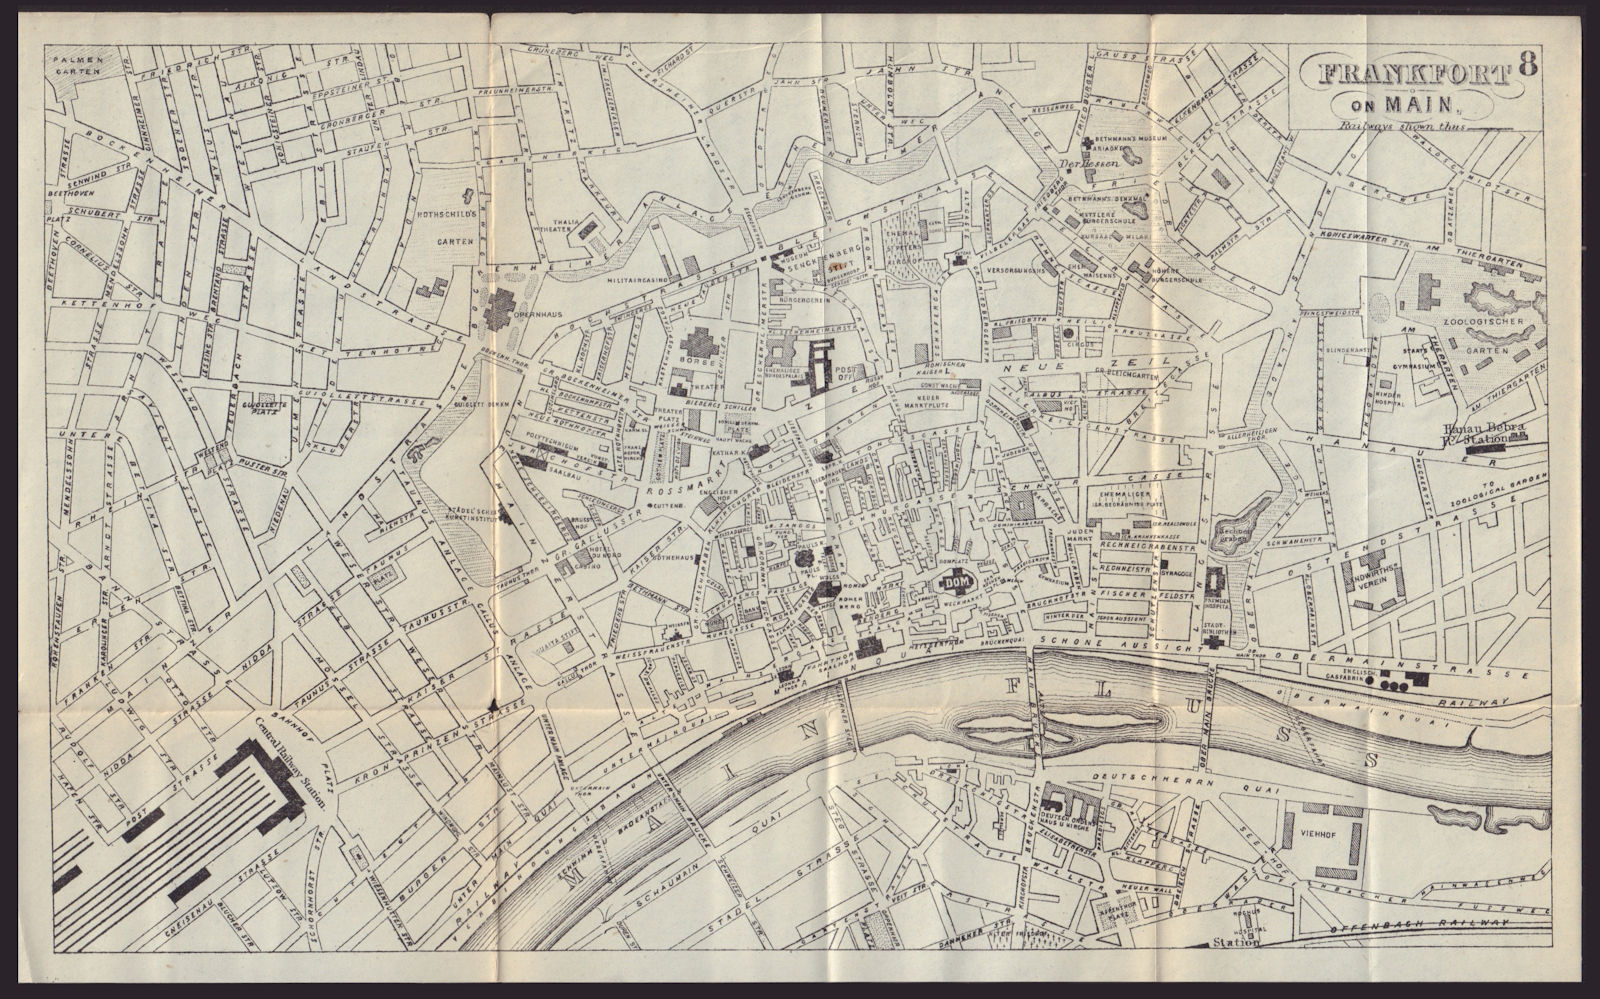 FRANKFURT AM MAIN antique town plan city map. Germany. BRADSHAW 1892 old